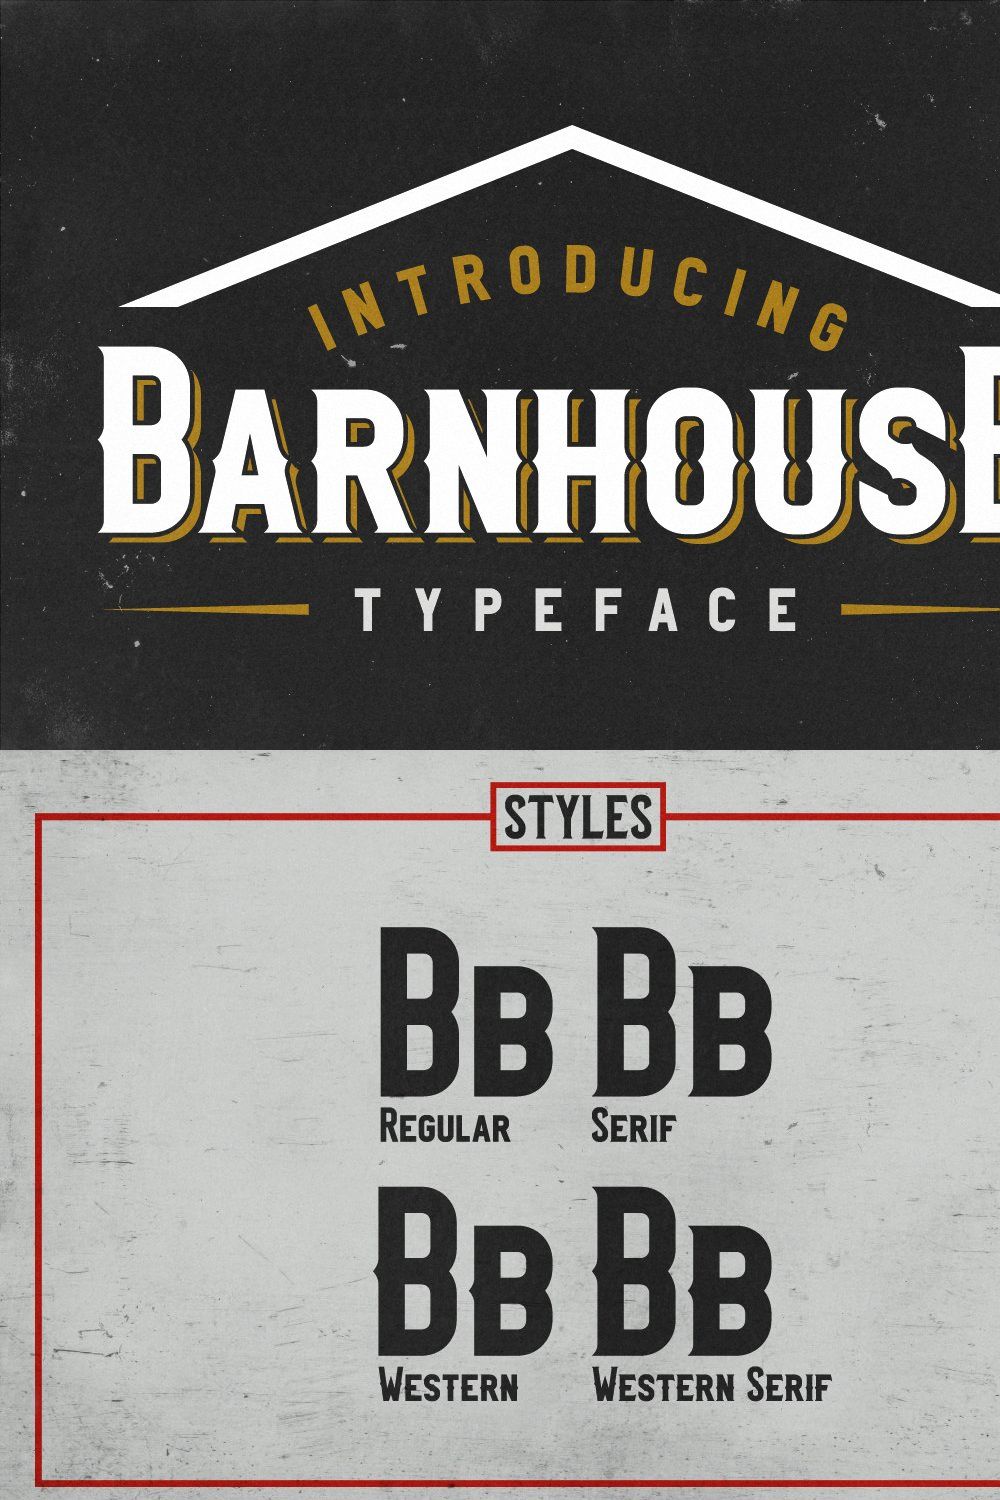 Barnhouse Typeface pinterest preview image.